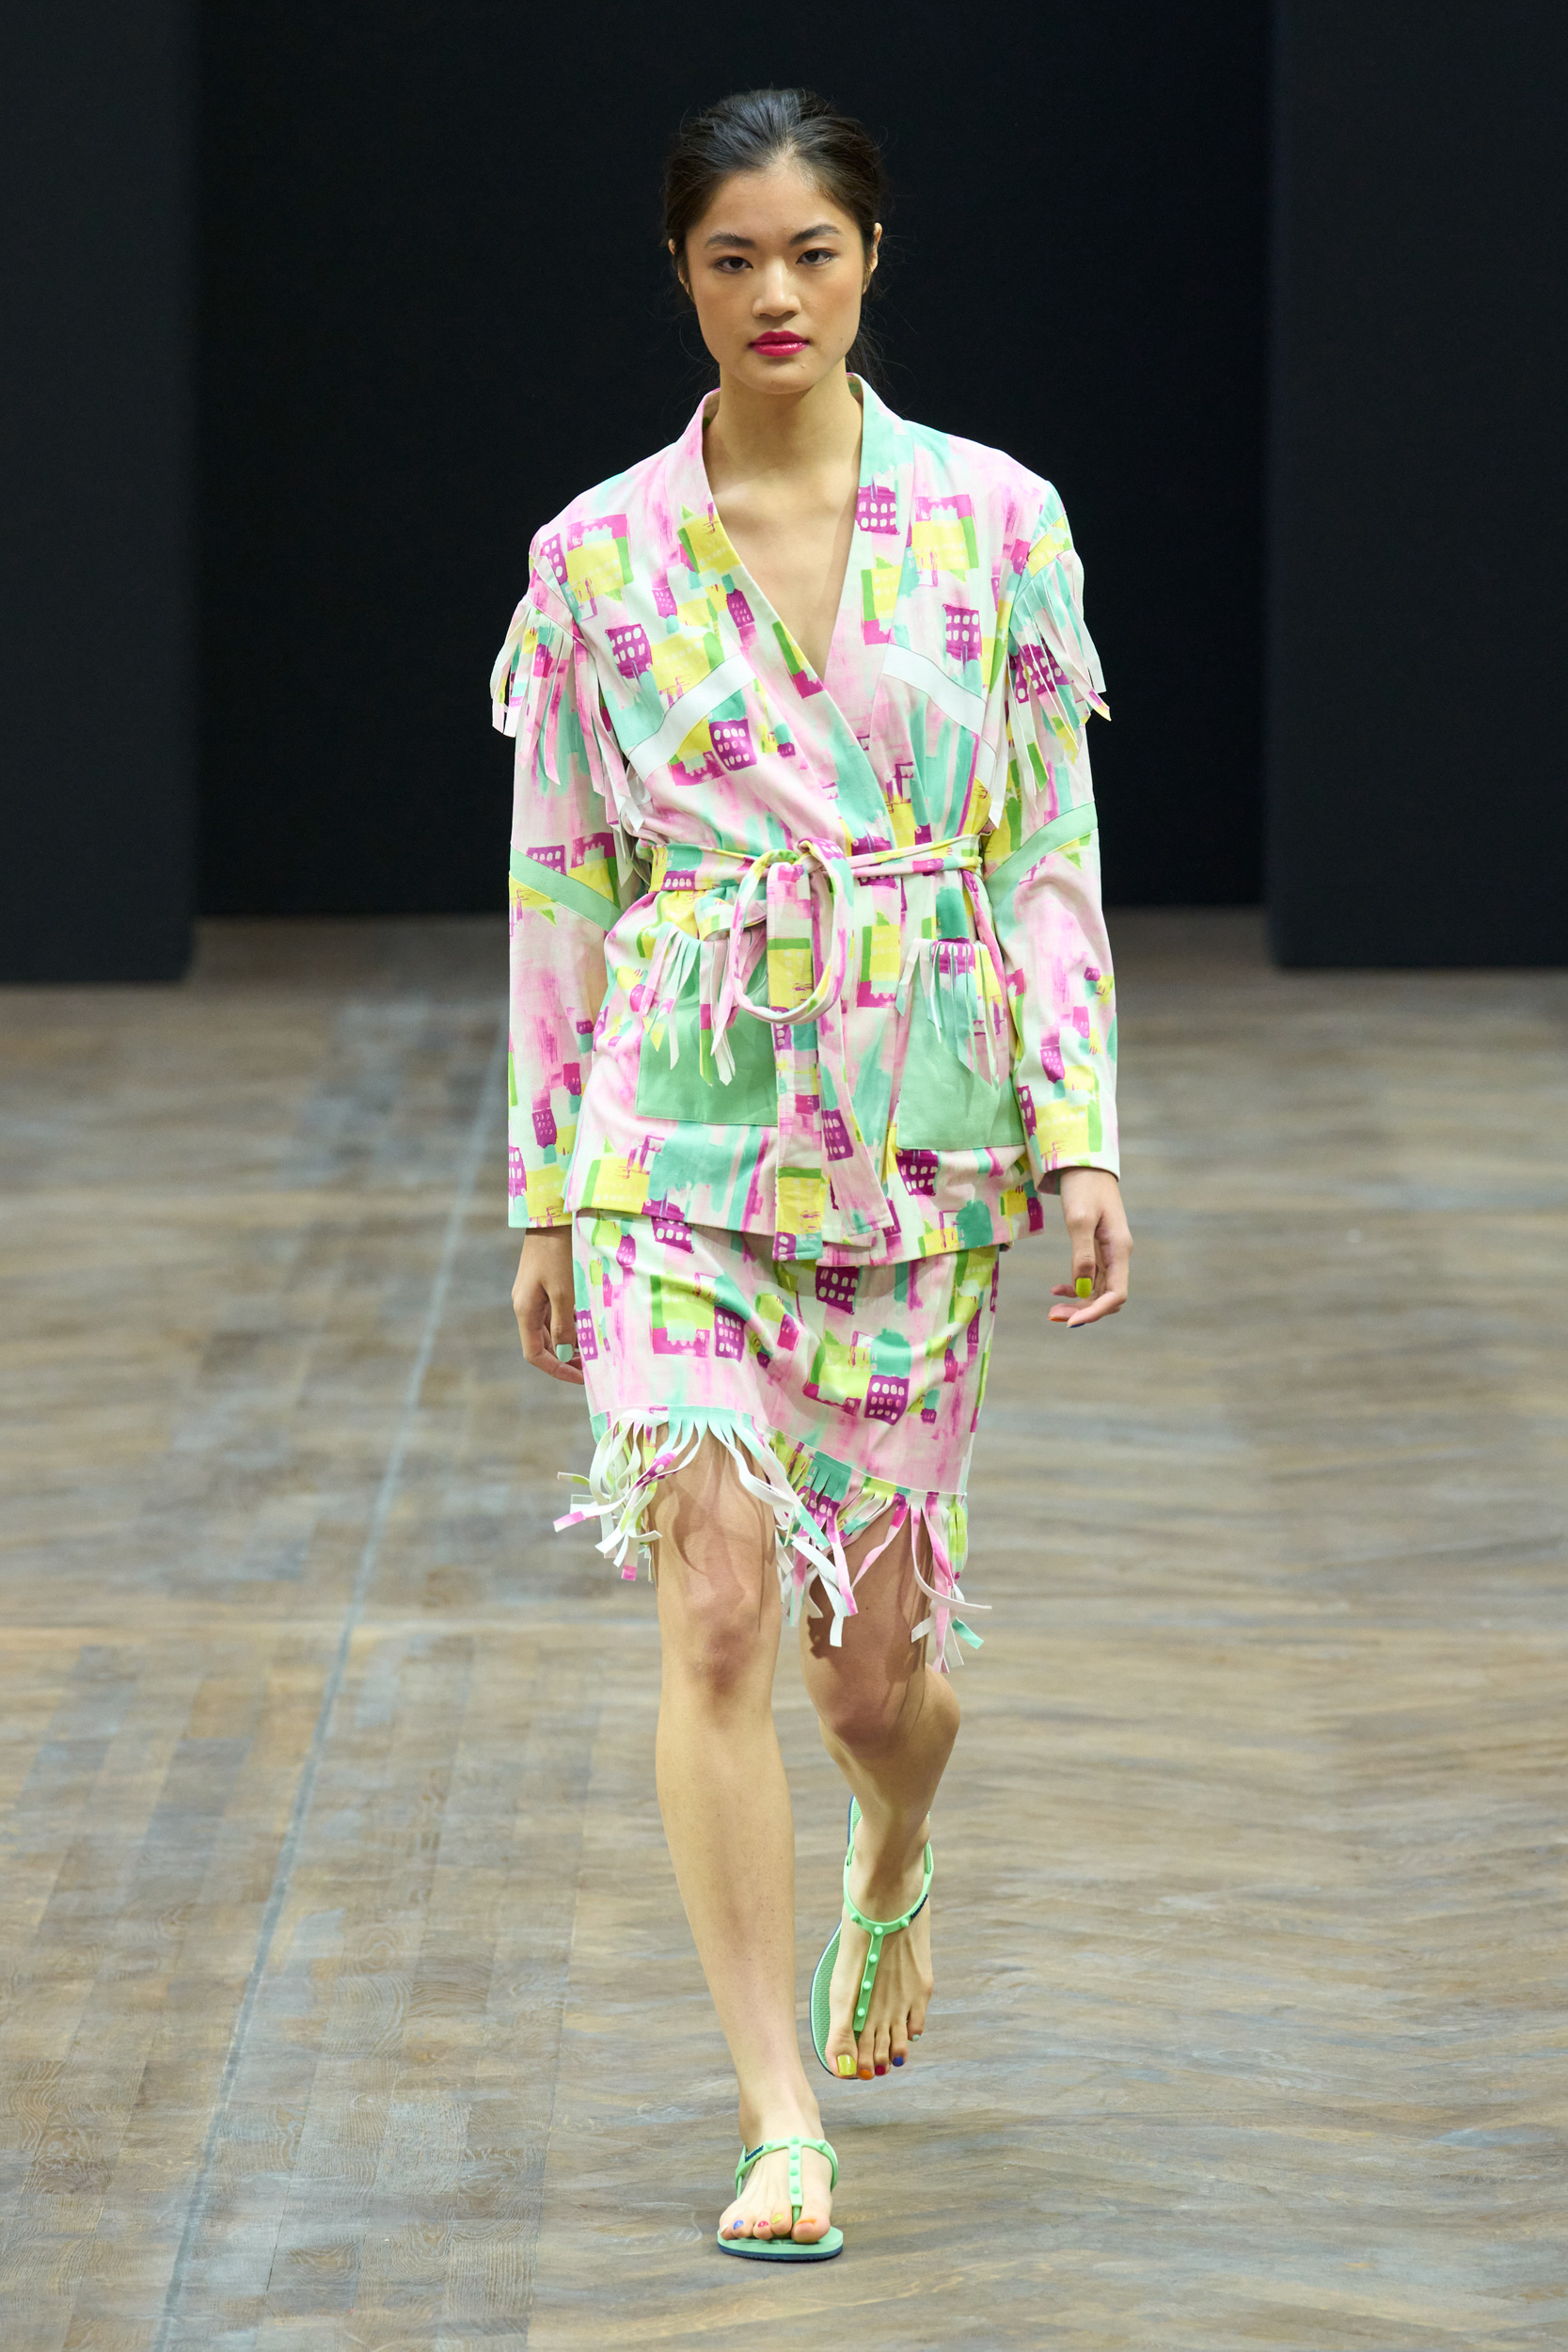 Malune By Frida Weyer Spring 2023 Fashion Show | The Impression